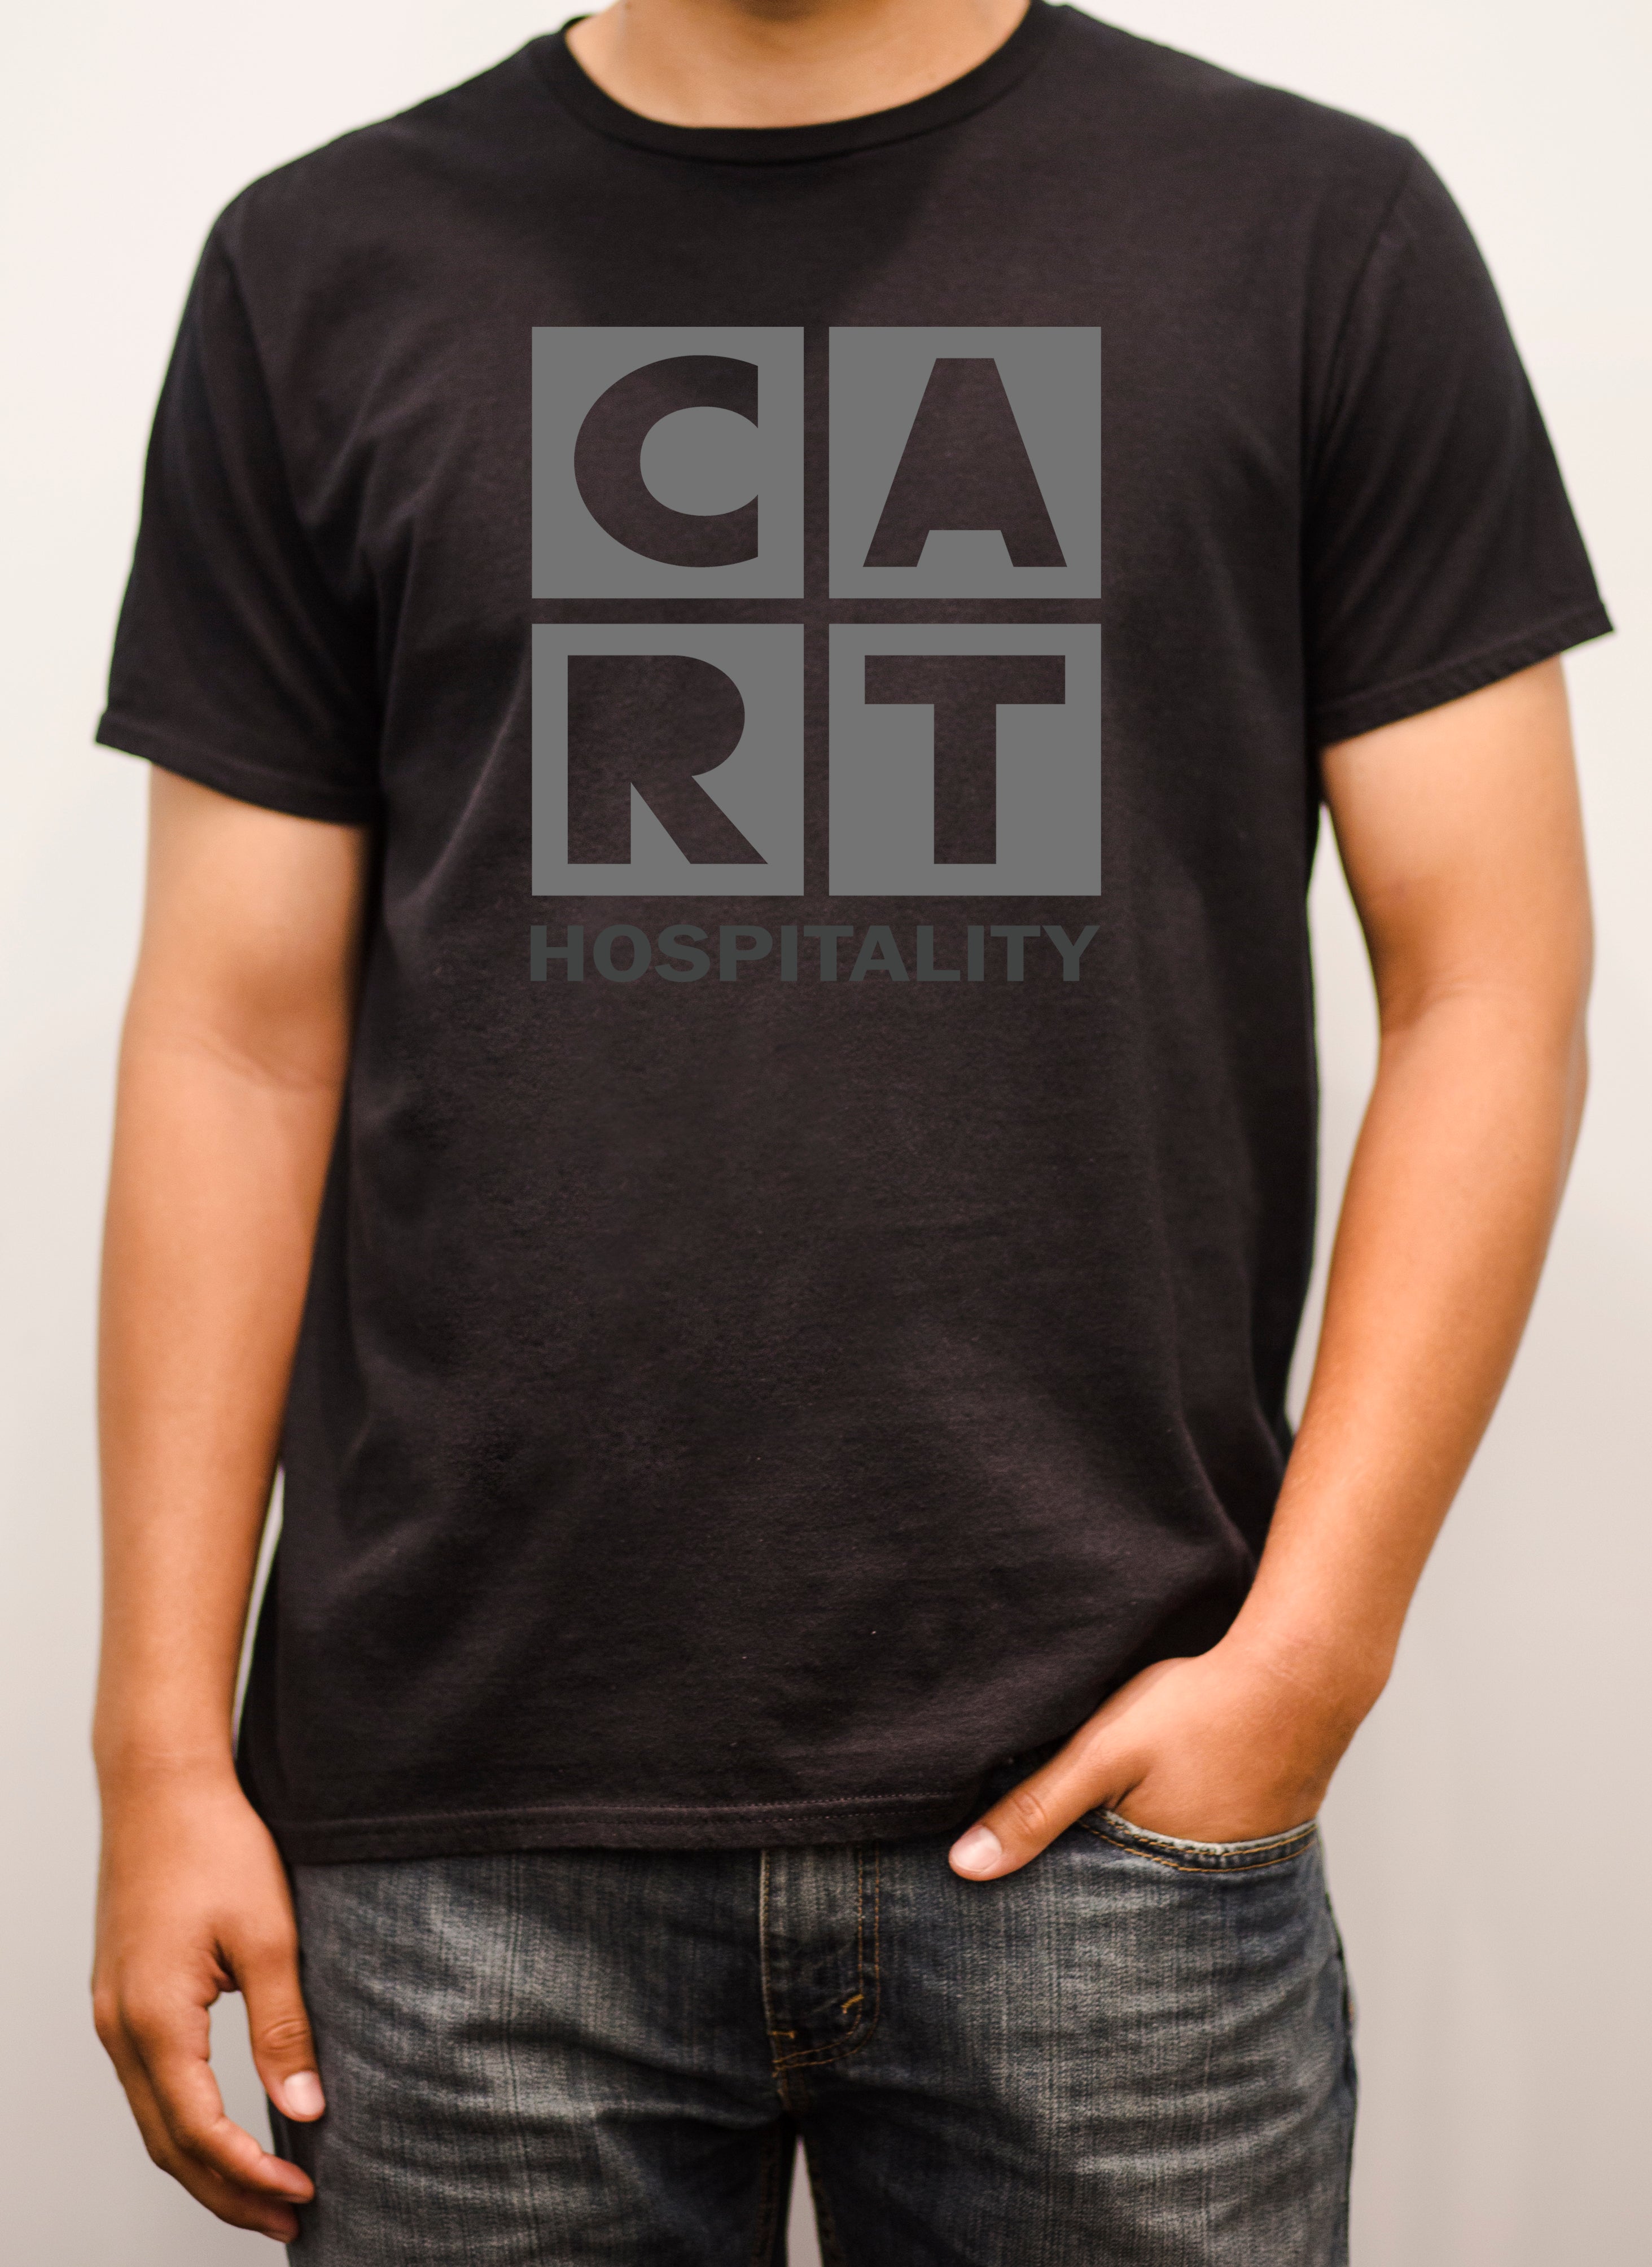 Short sleeve t-shirt - hospitality grey/black